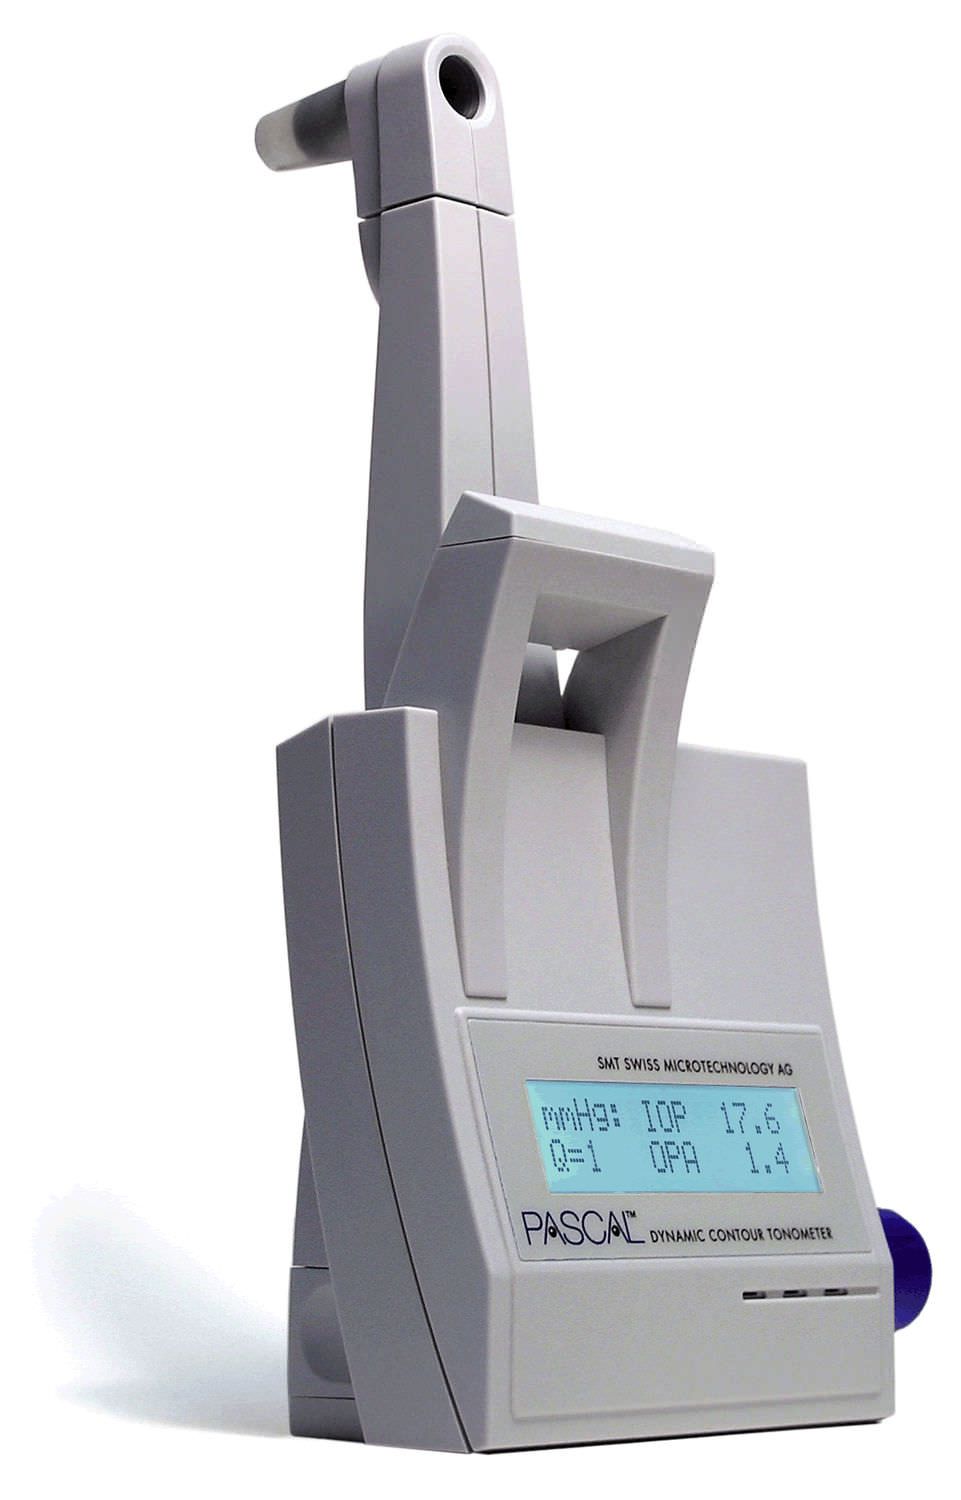 Tonometer (ophthalmic examination) / dynamic contour tonometry PASCAL Ziemer Group